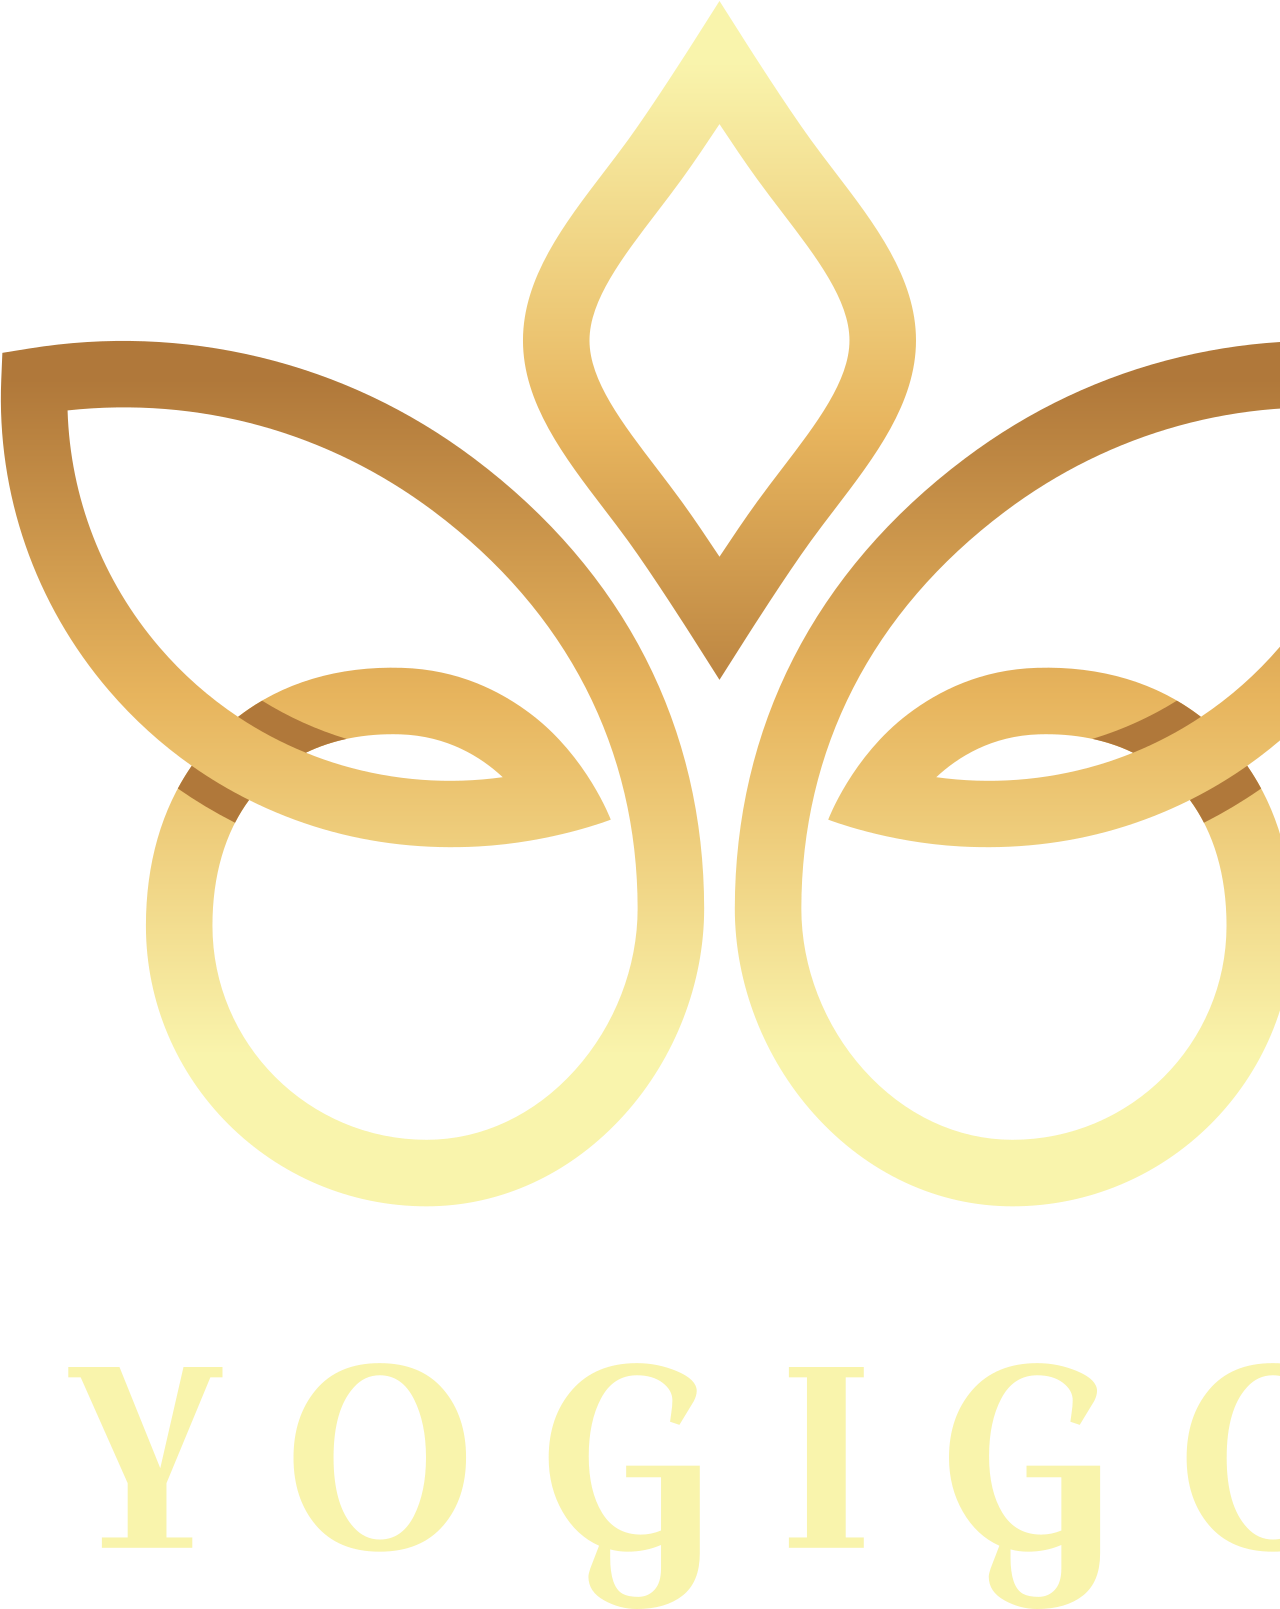 Yogigo's web page